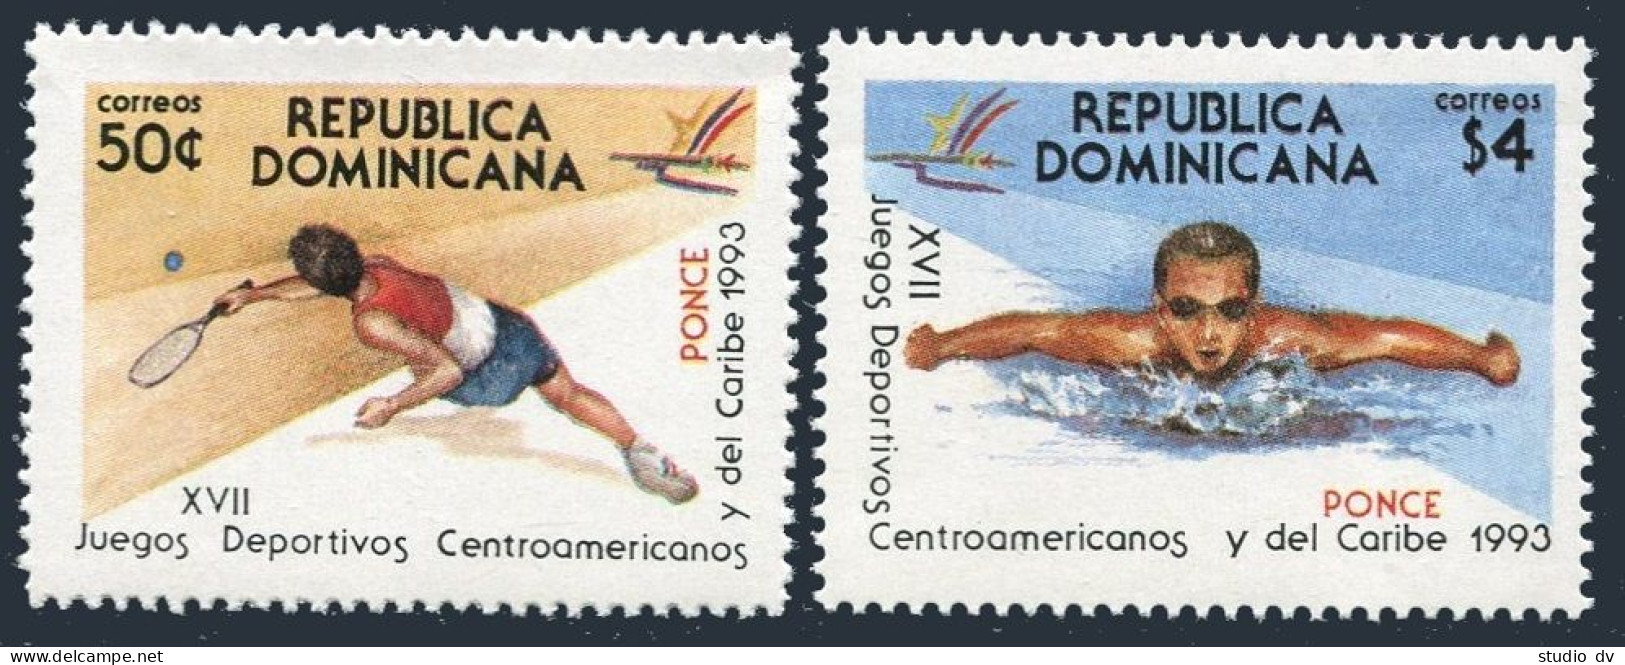 Dominican Rep 1140-1141, MNH. Michel 1680-1681. Games-1993. Tennis, Swimming. - Dominikanische Rep.